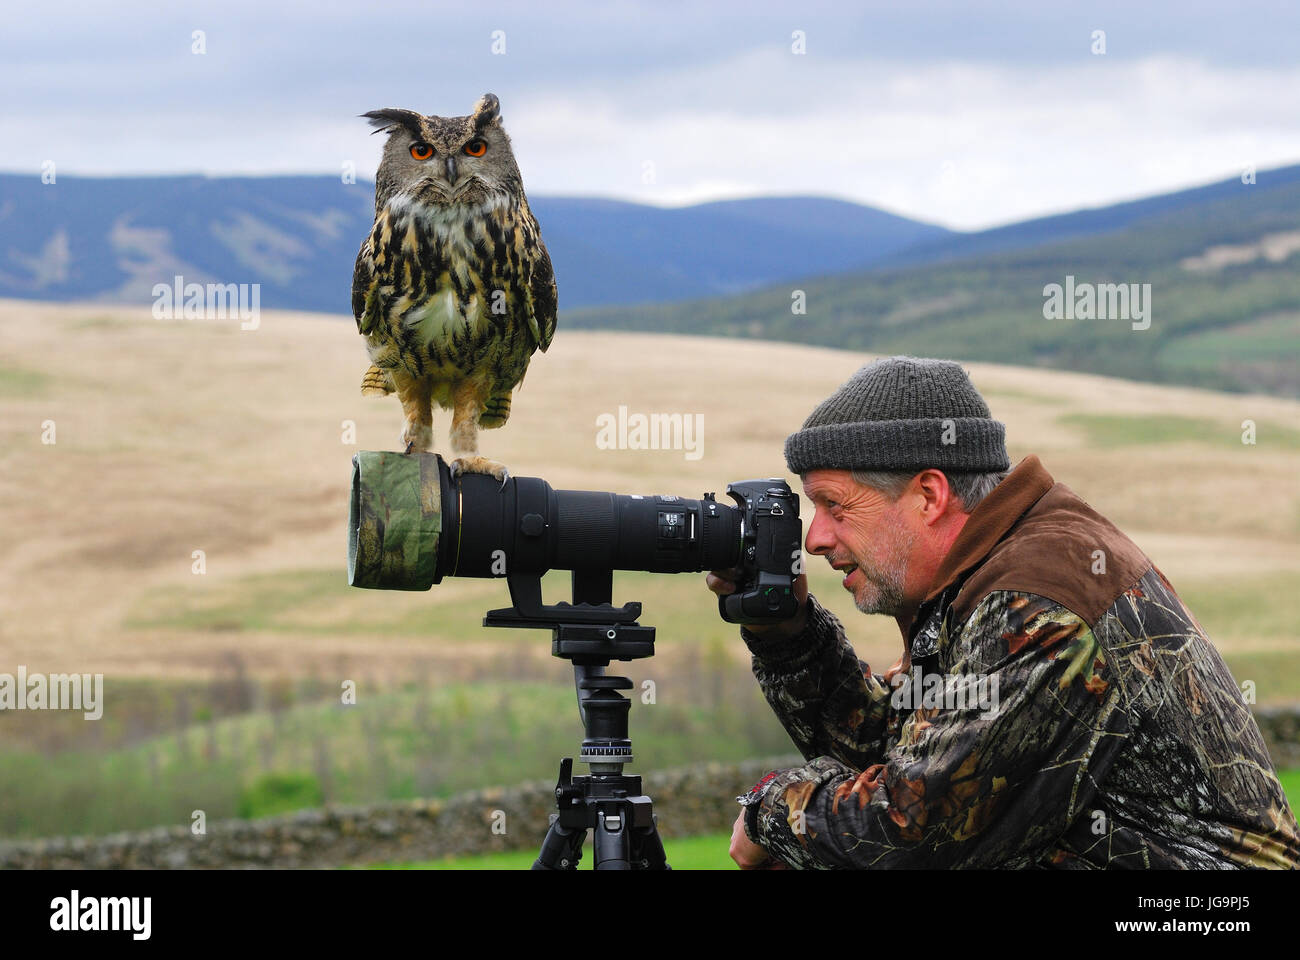 European Eagle Owl on photographers camera Stock Photo